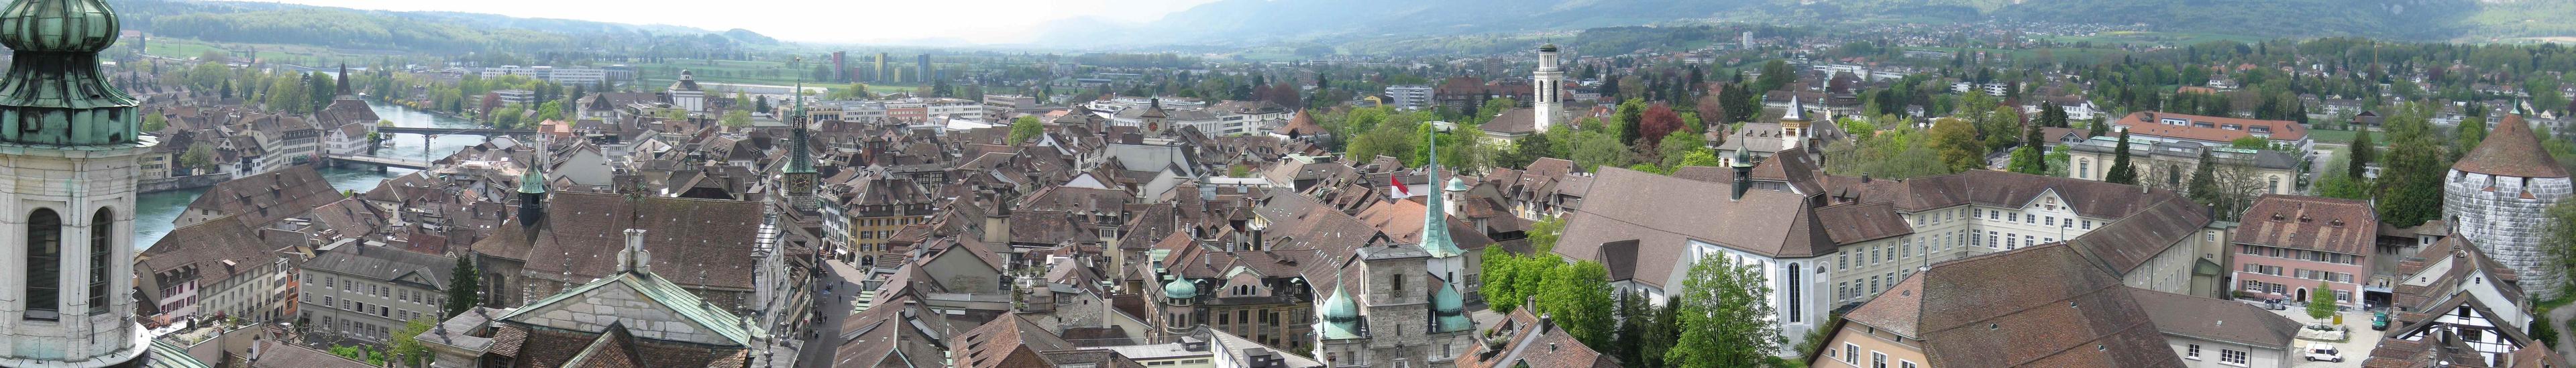 Banner image for Solothurn on GigsGuide